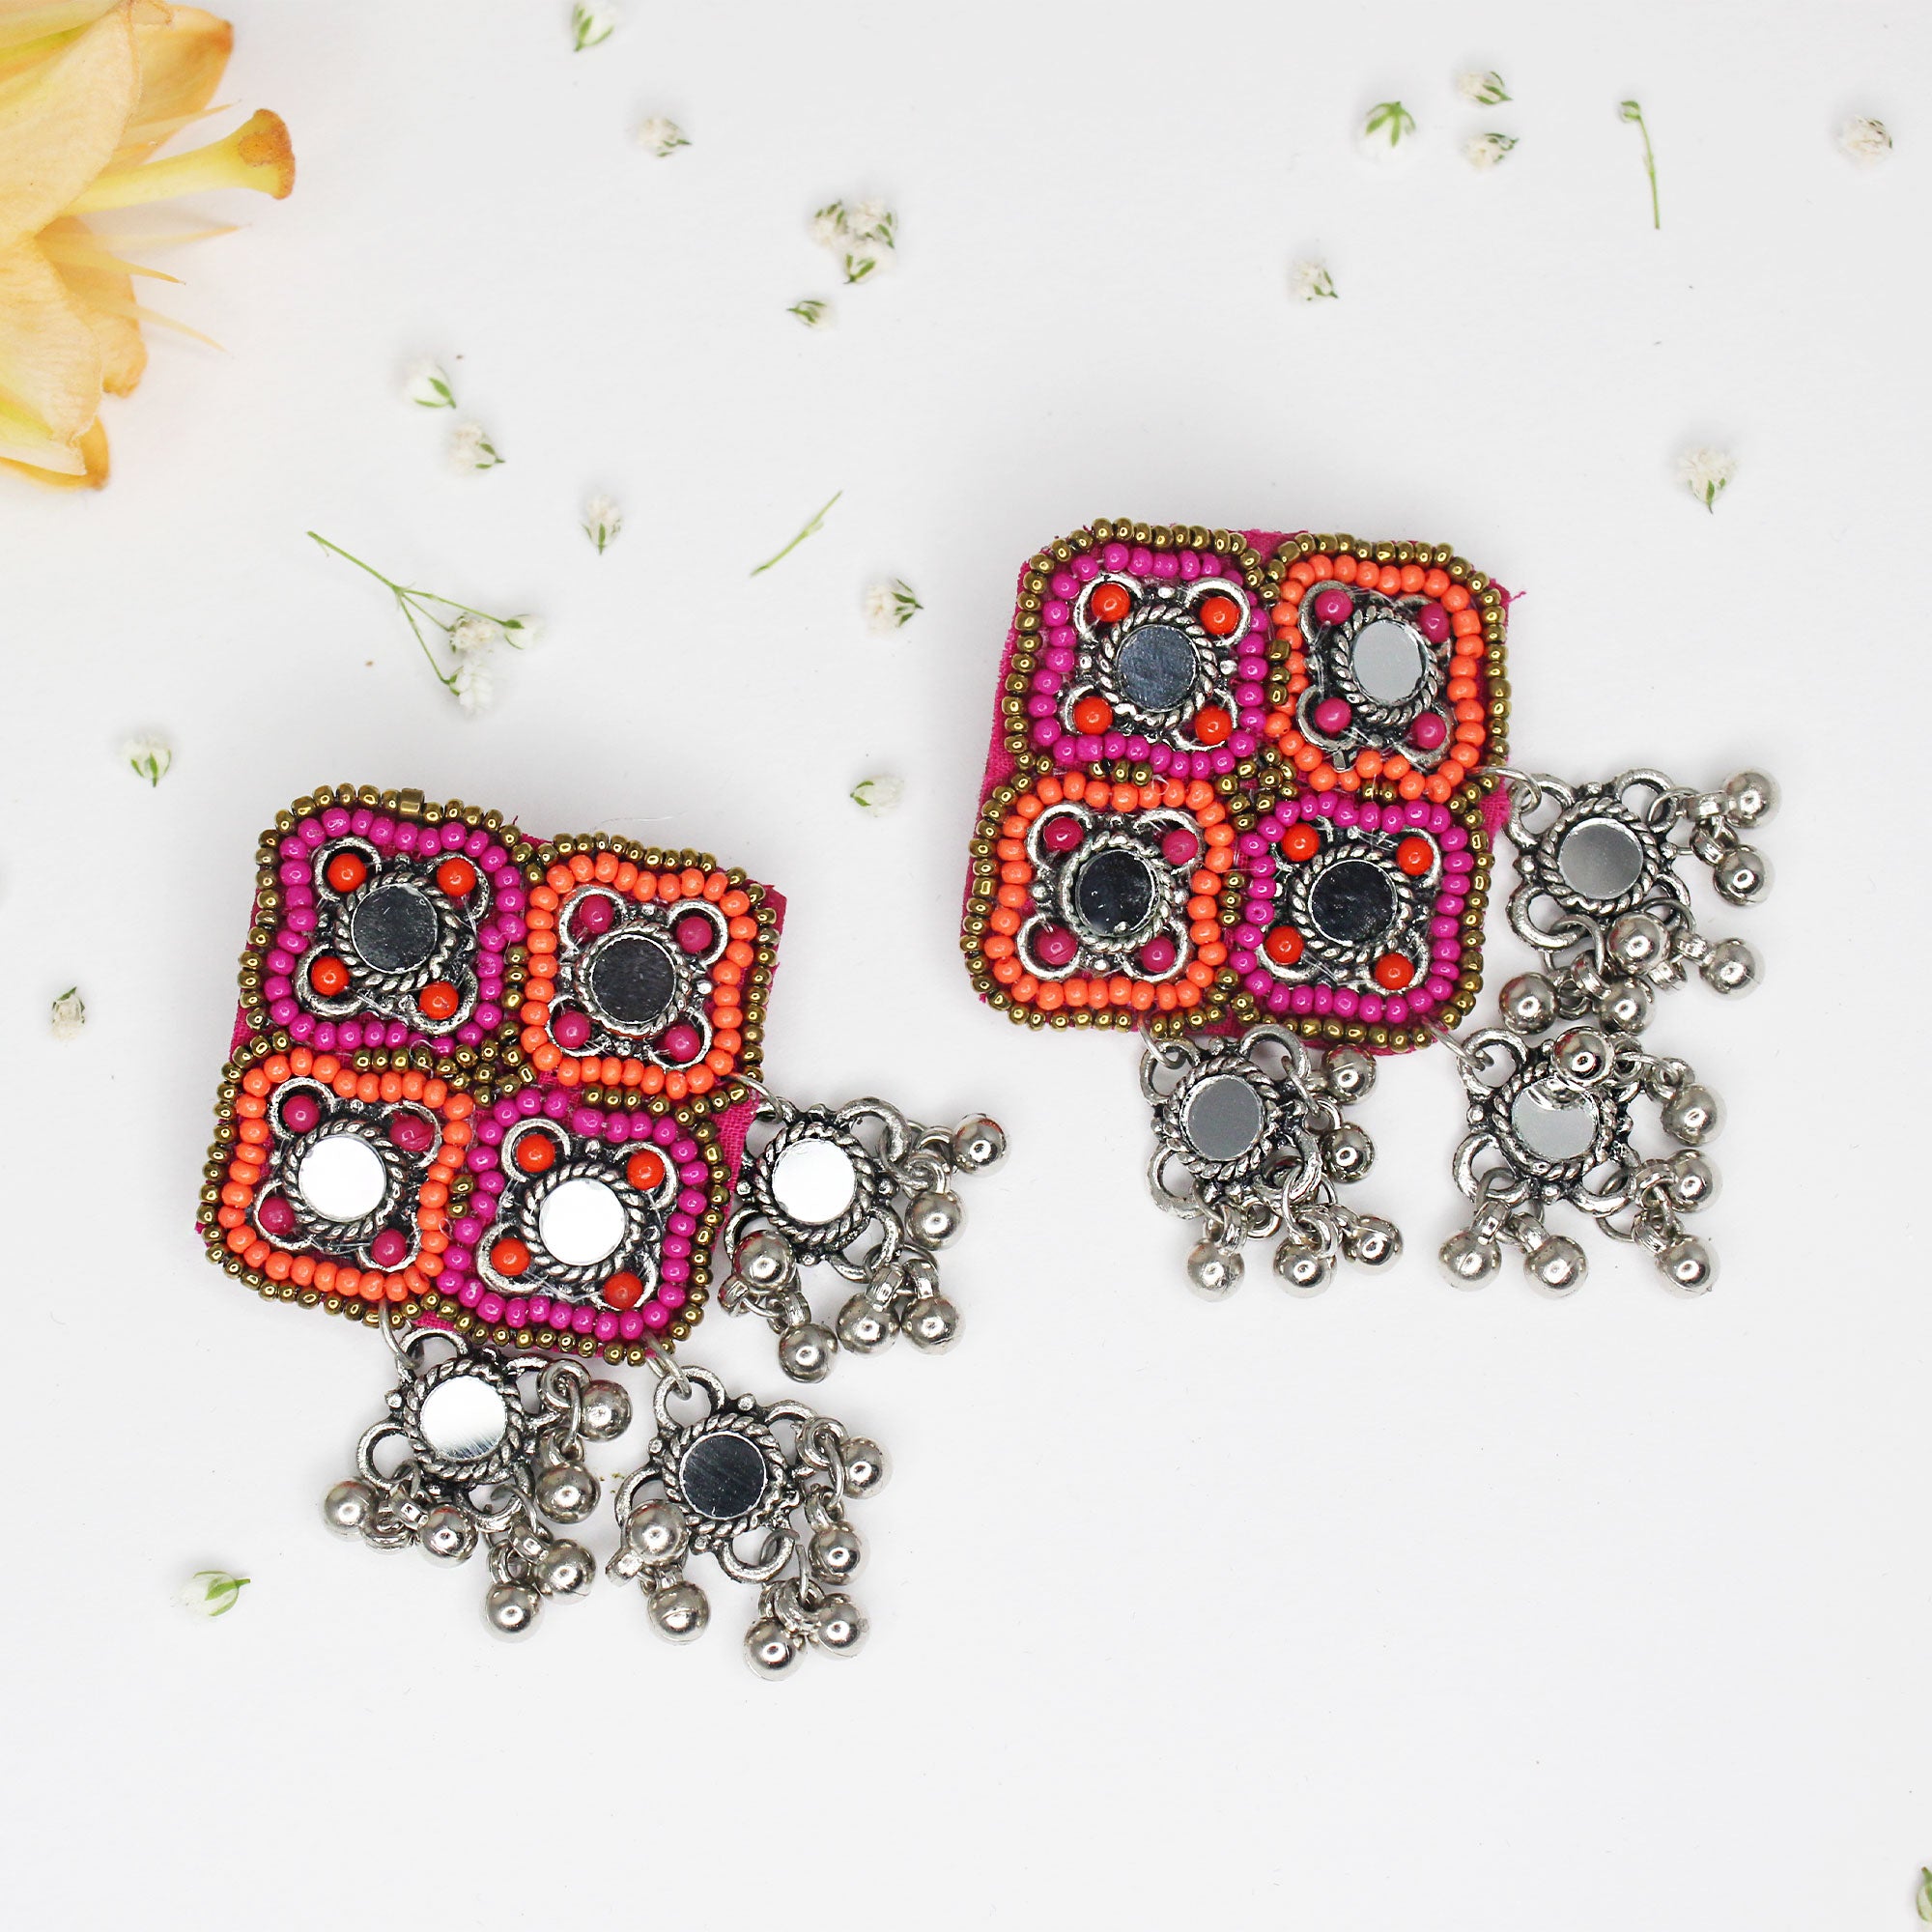 Hastkalakari Handmade Beaded Pink-Orange Diamond Shape Mirror Earrings For Women